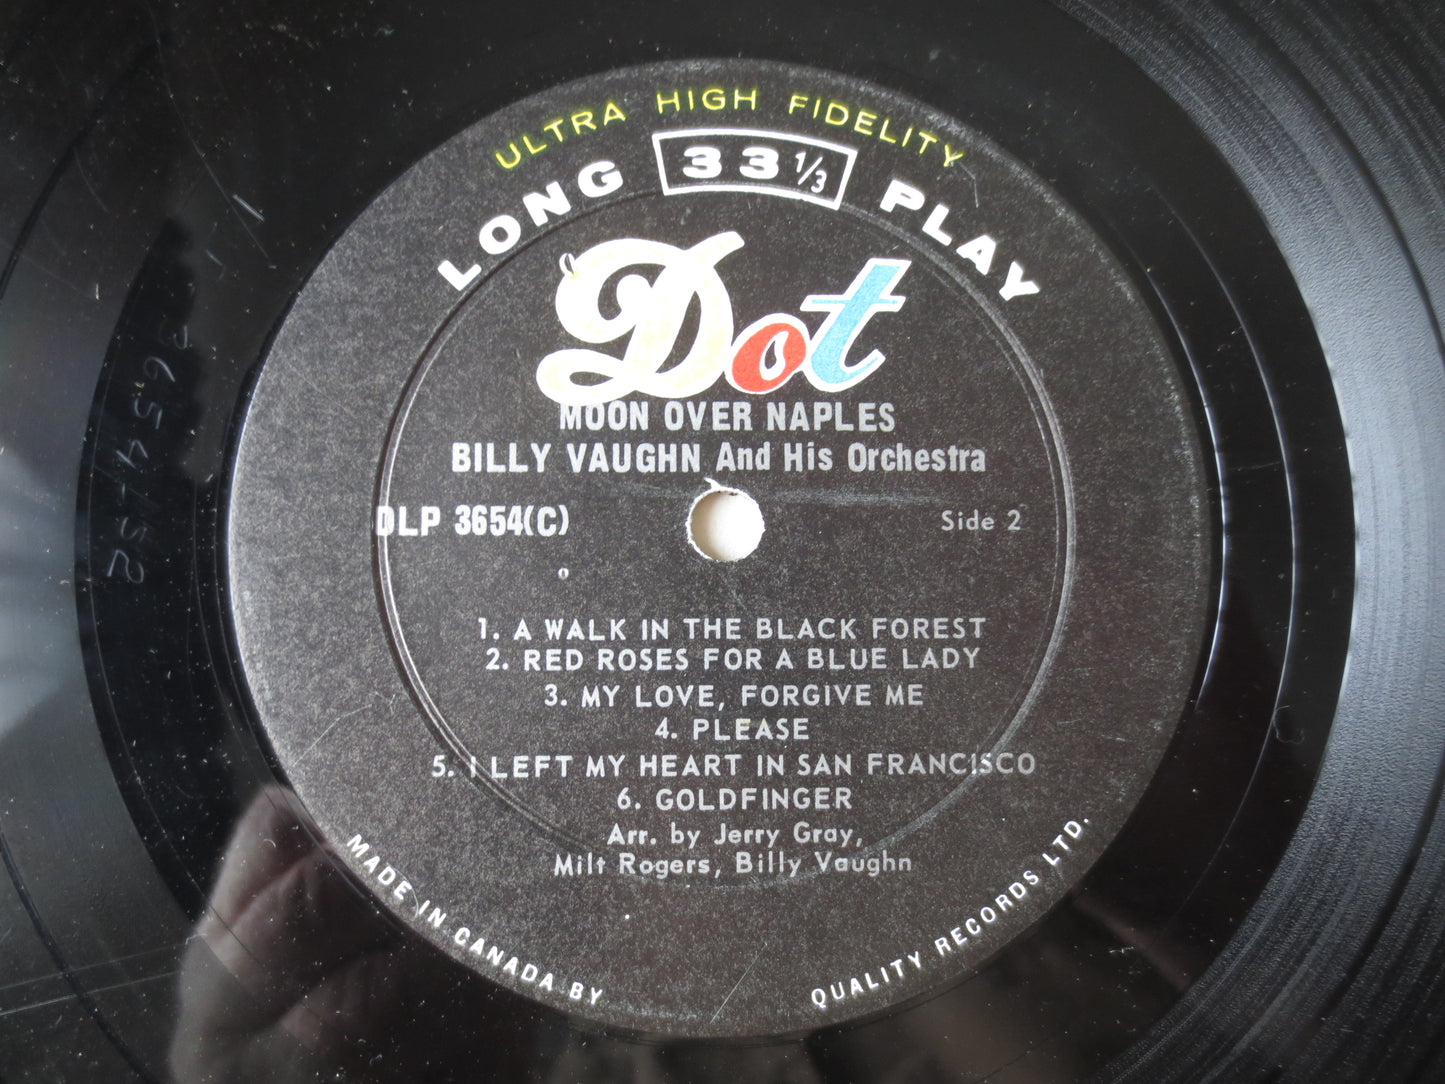 BILLY VAUGHN, MOON Over Naples, Billy Vaughn Record, Vintage Vinyl, Billy Vaughn Albums, Vinyl Album, Vinyl Lp, 1965 Record